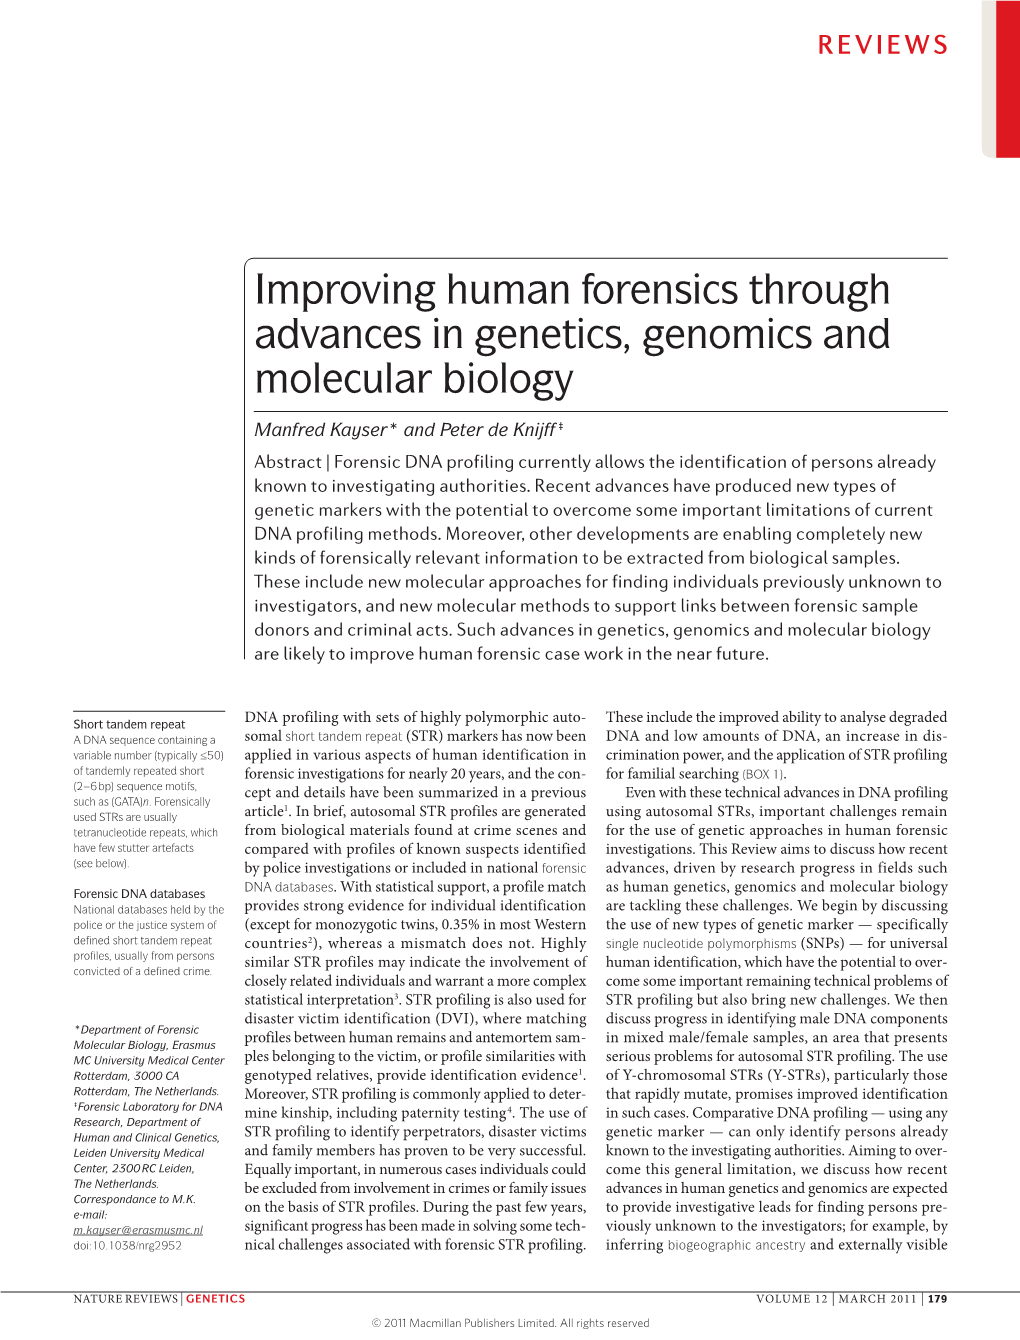 Improving Human Forensics Through Advances in Genetics, Genomics and Molecular Biology